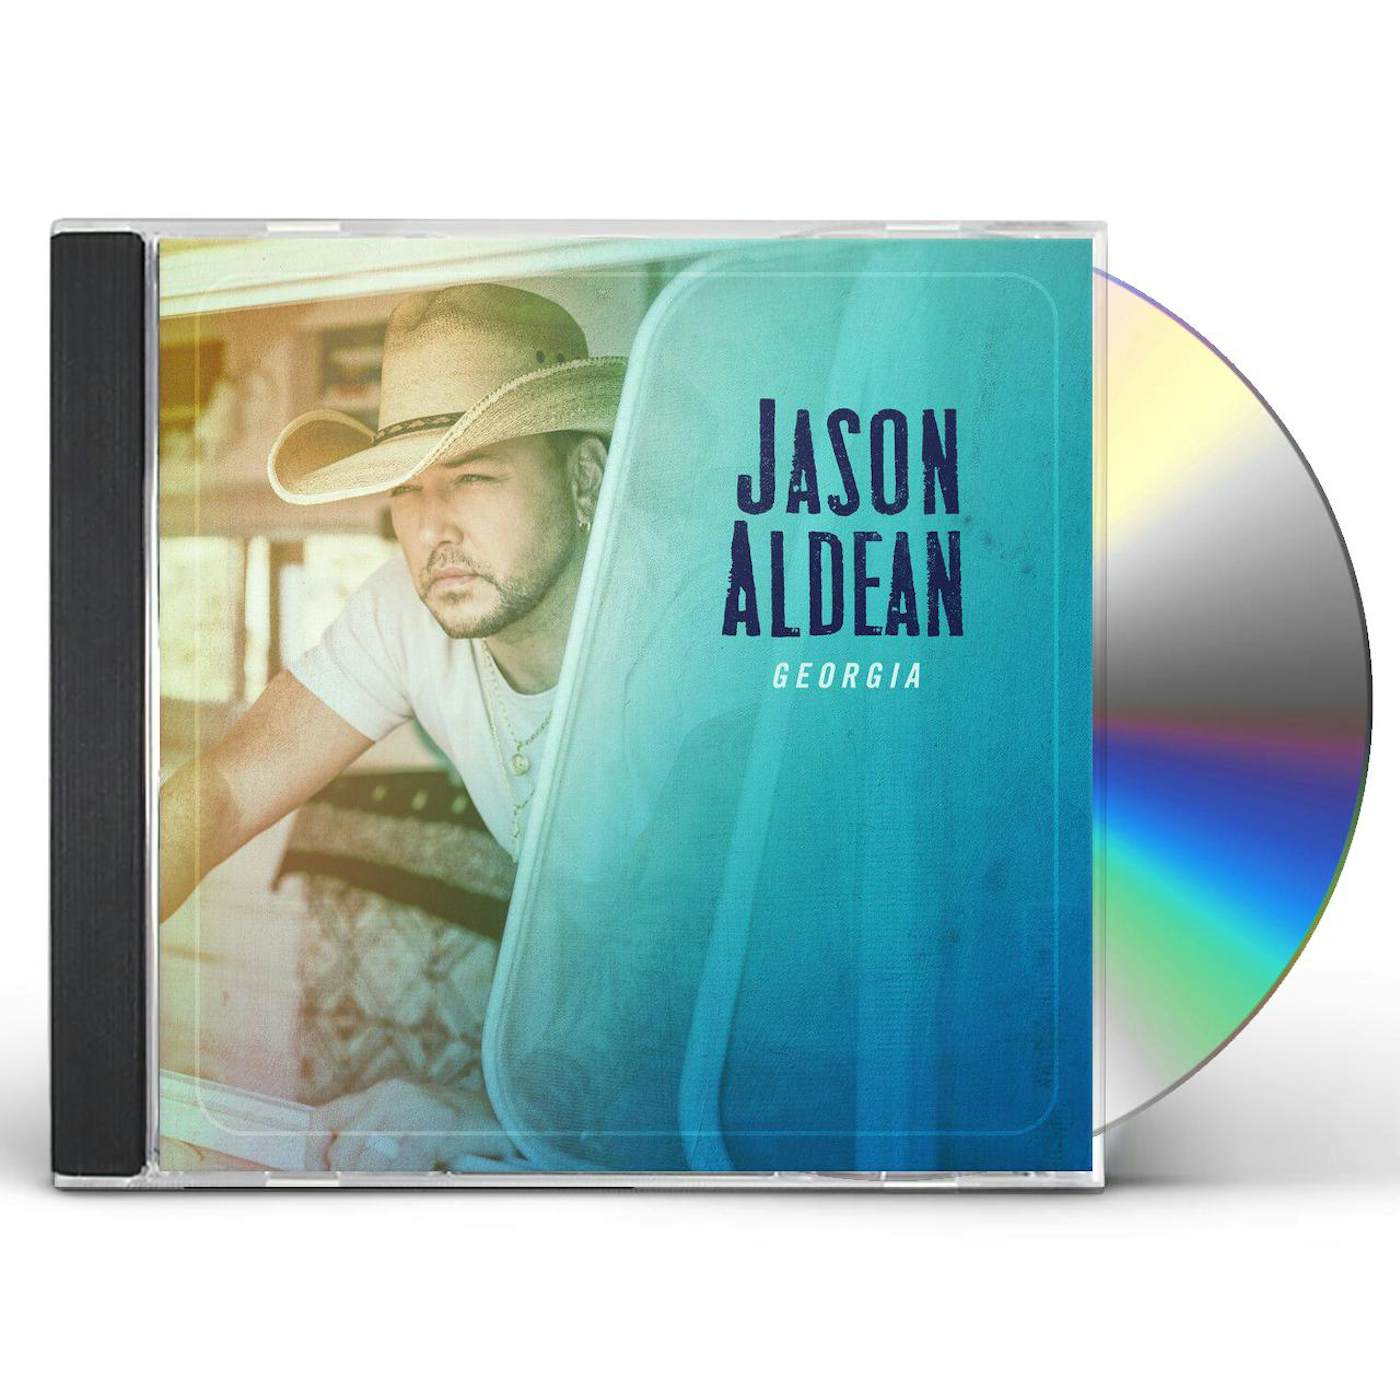 Jason Aldean GEORGIA CD